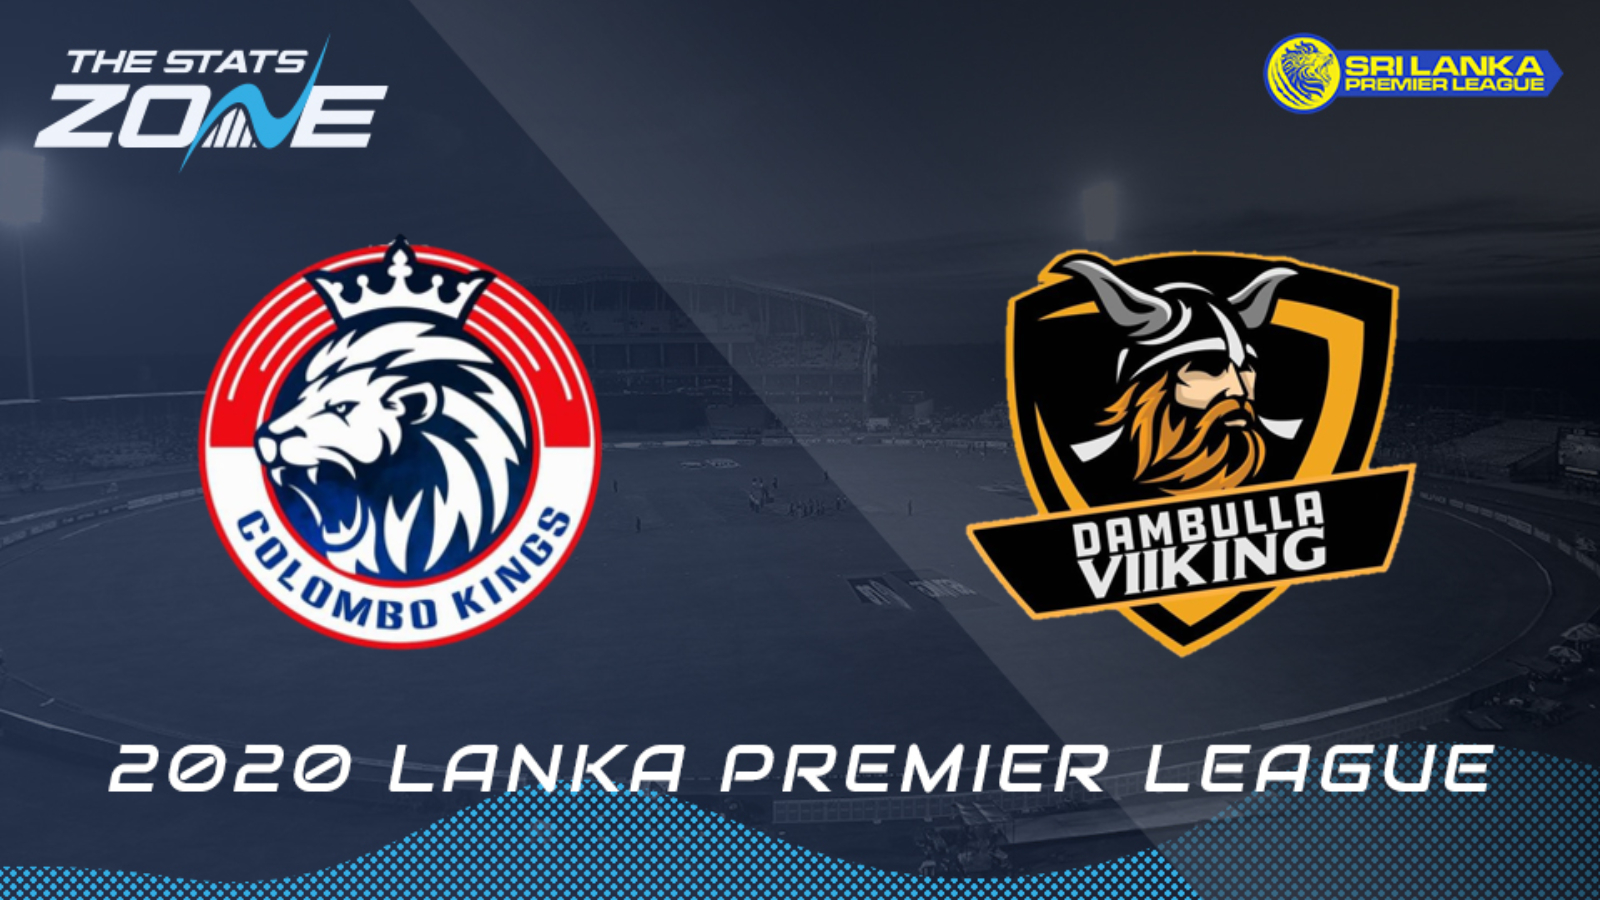 2020 Lanka Premier League